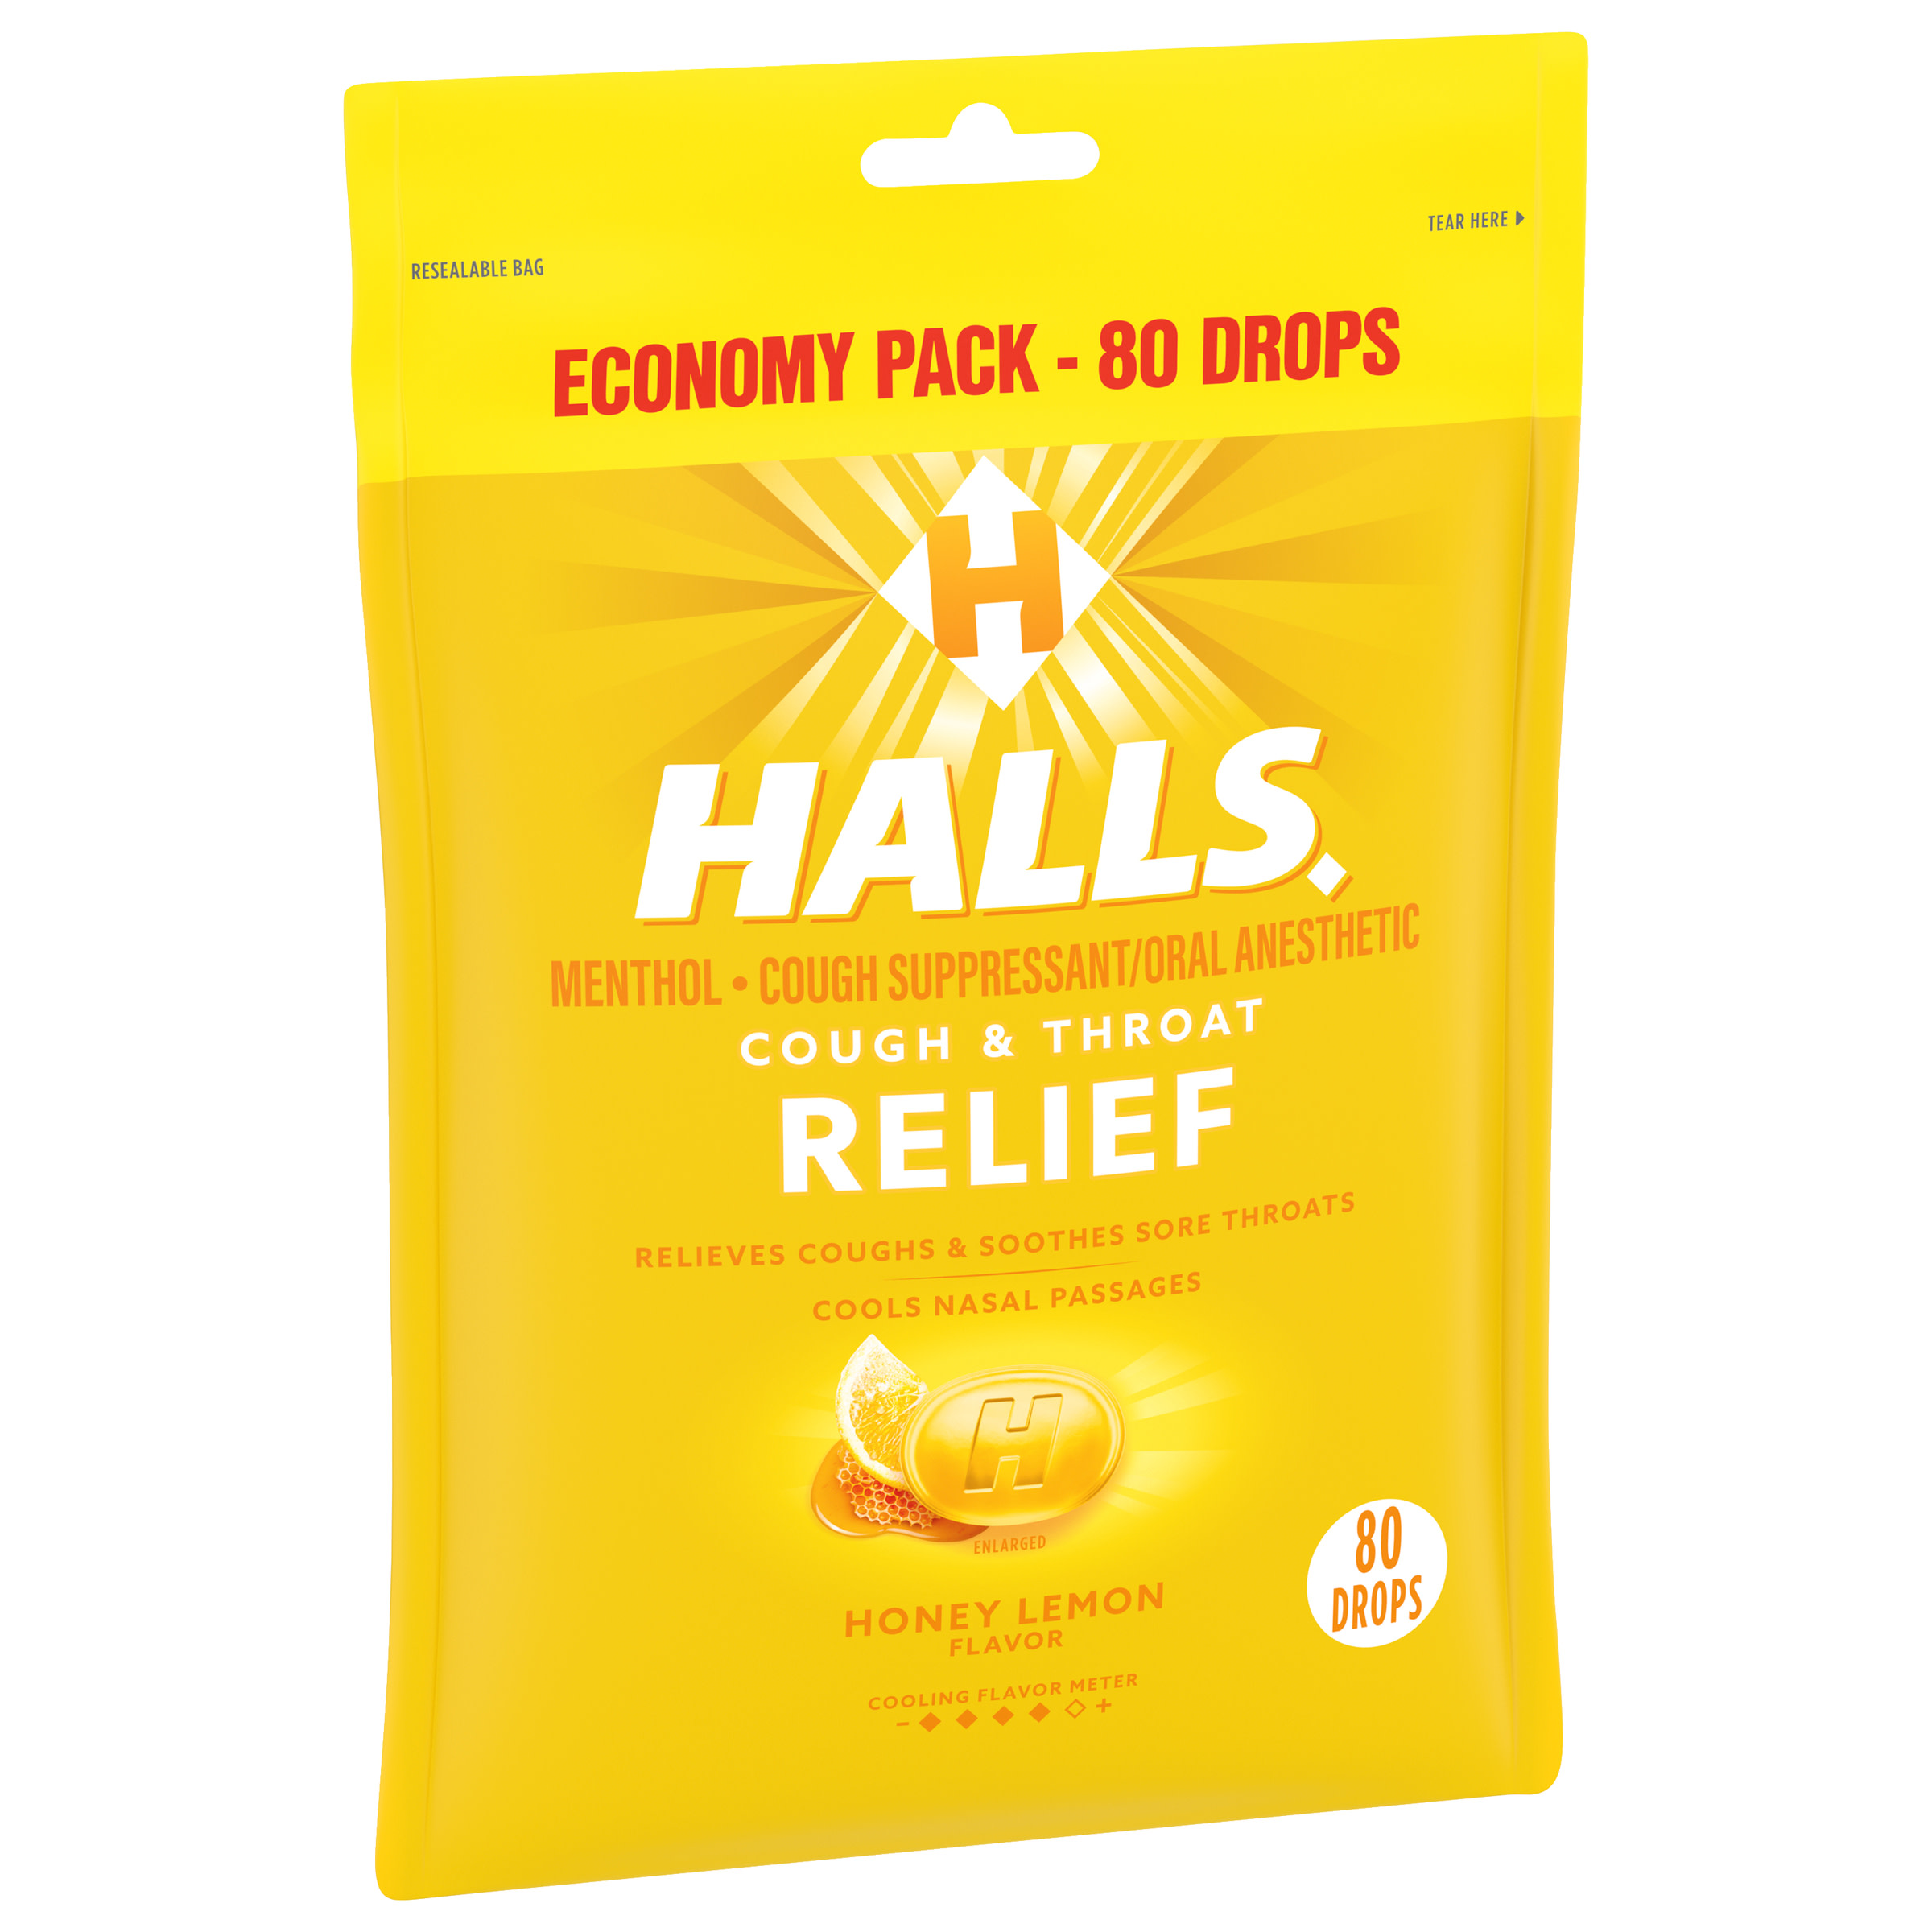 HALLS Relief Honey Lemon Cough Drops, Economy Pack, 80 Drops - image 2 of 12